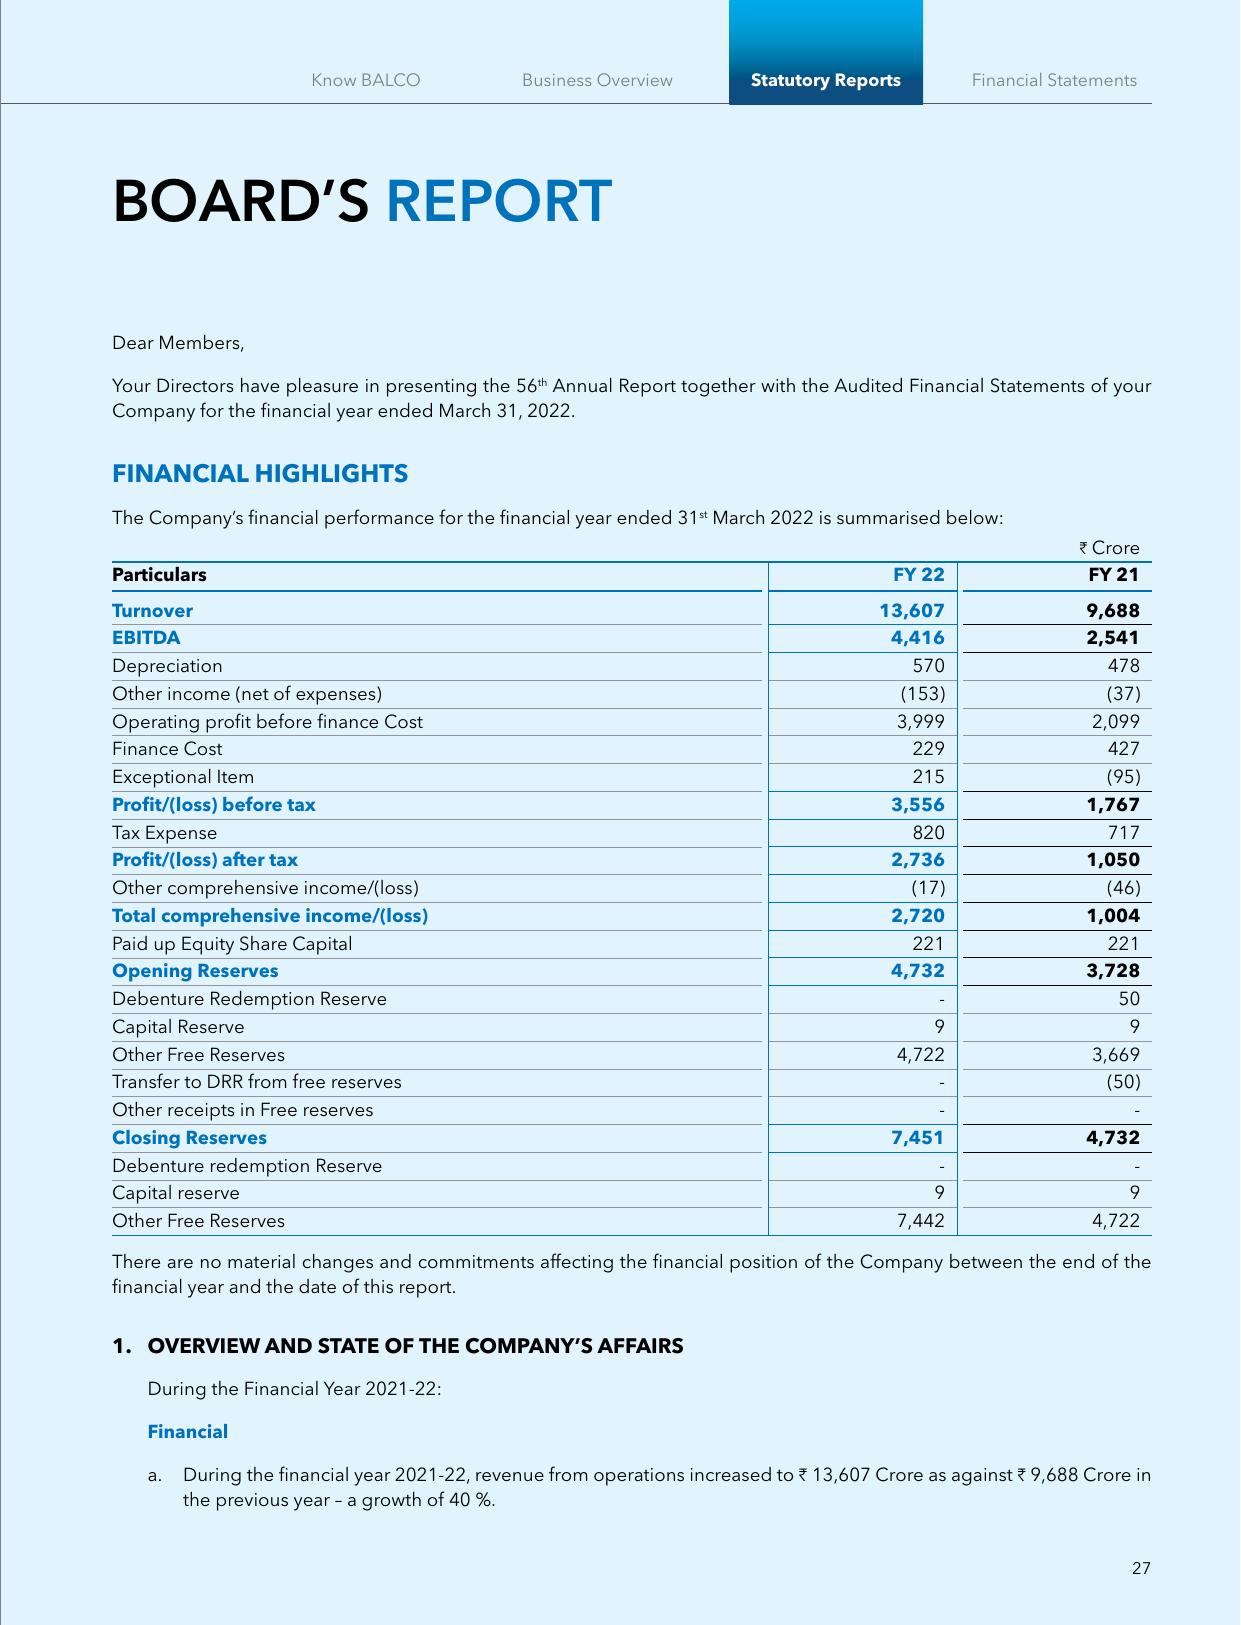 BALCOINDIA 2021 Annual Report